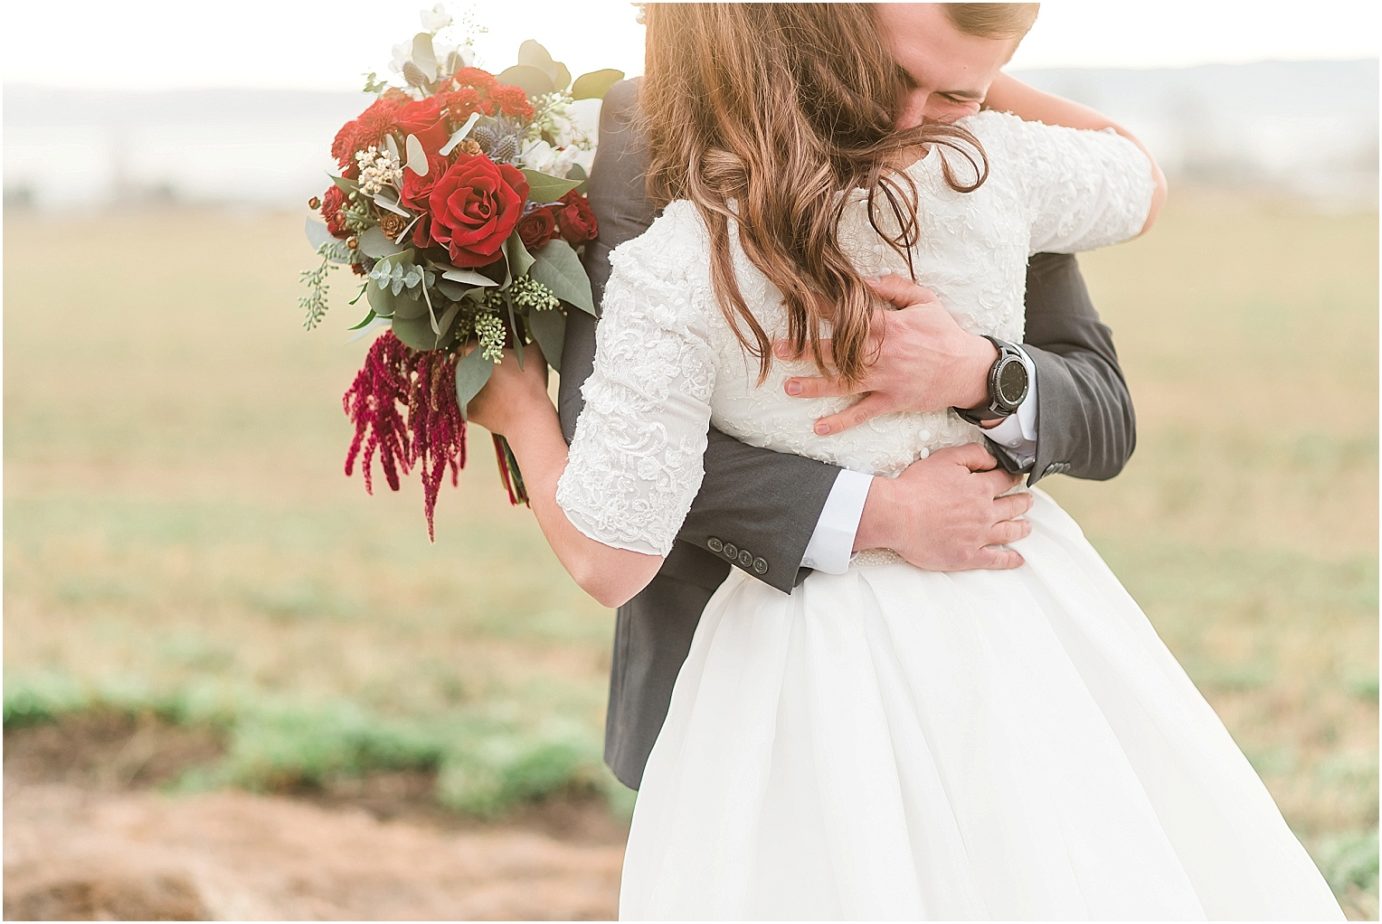 Ellensburg backyard wedding- first look in a field